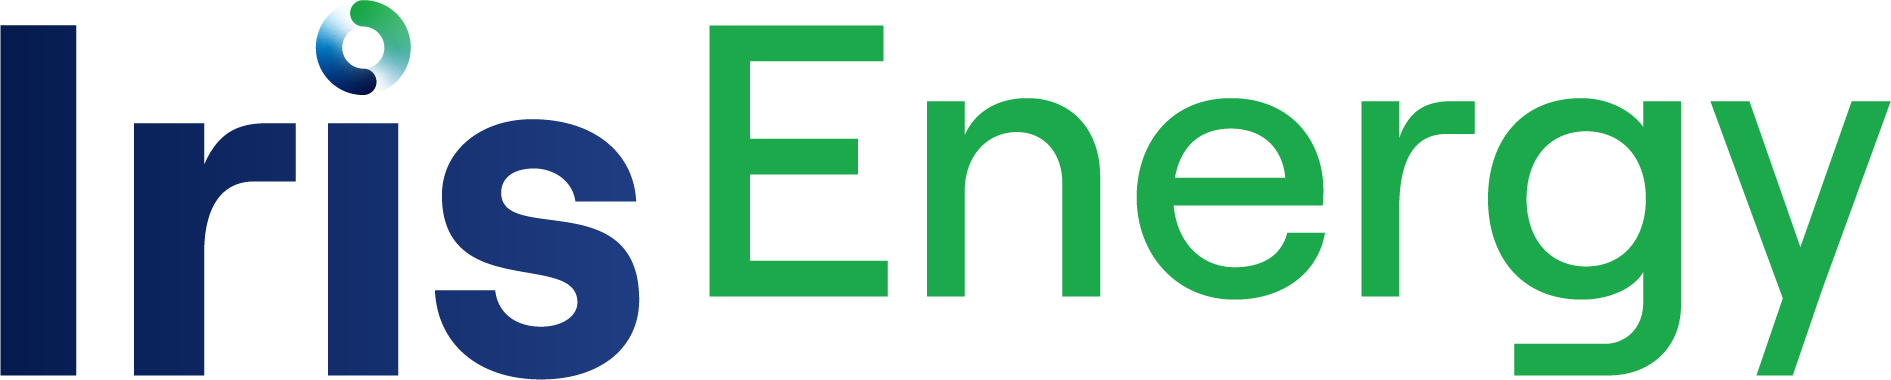 Iris Energy logo large (transparent PNG)